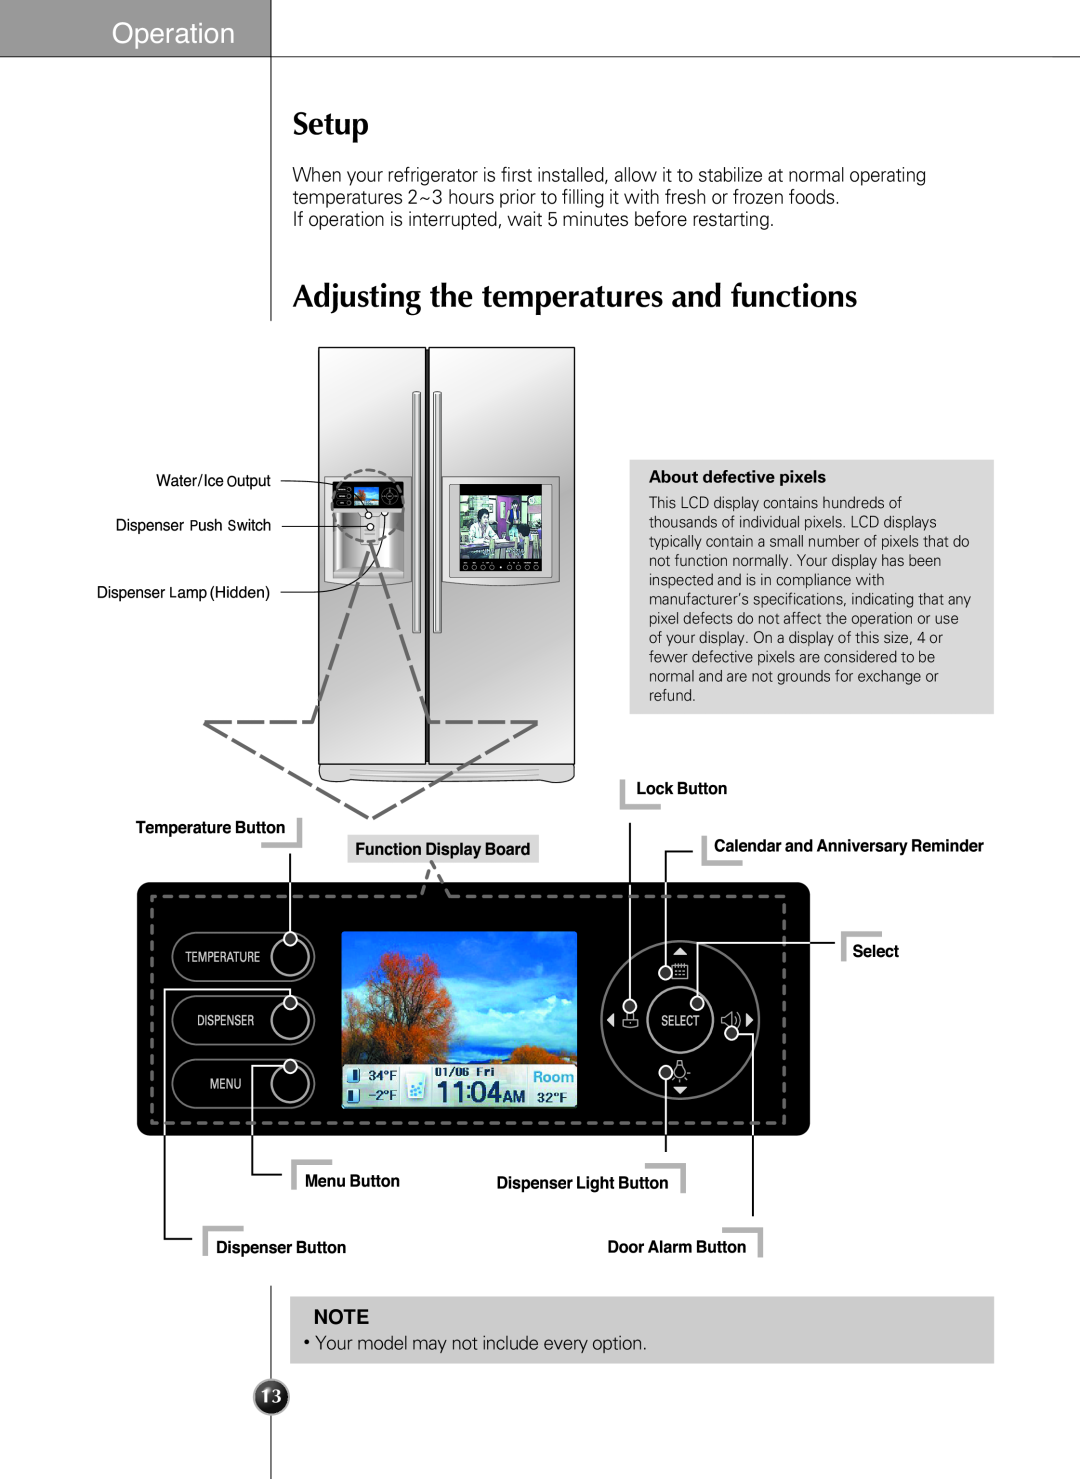 LG Electronics LSC27990TT Hidden, Setup, Adjusting the temperatures and functions, Operation, TemperatureButton, Dispenser 